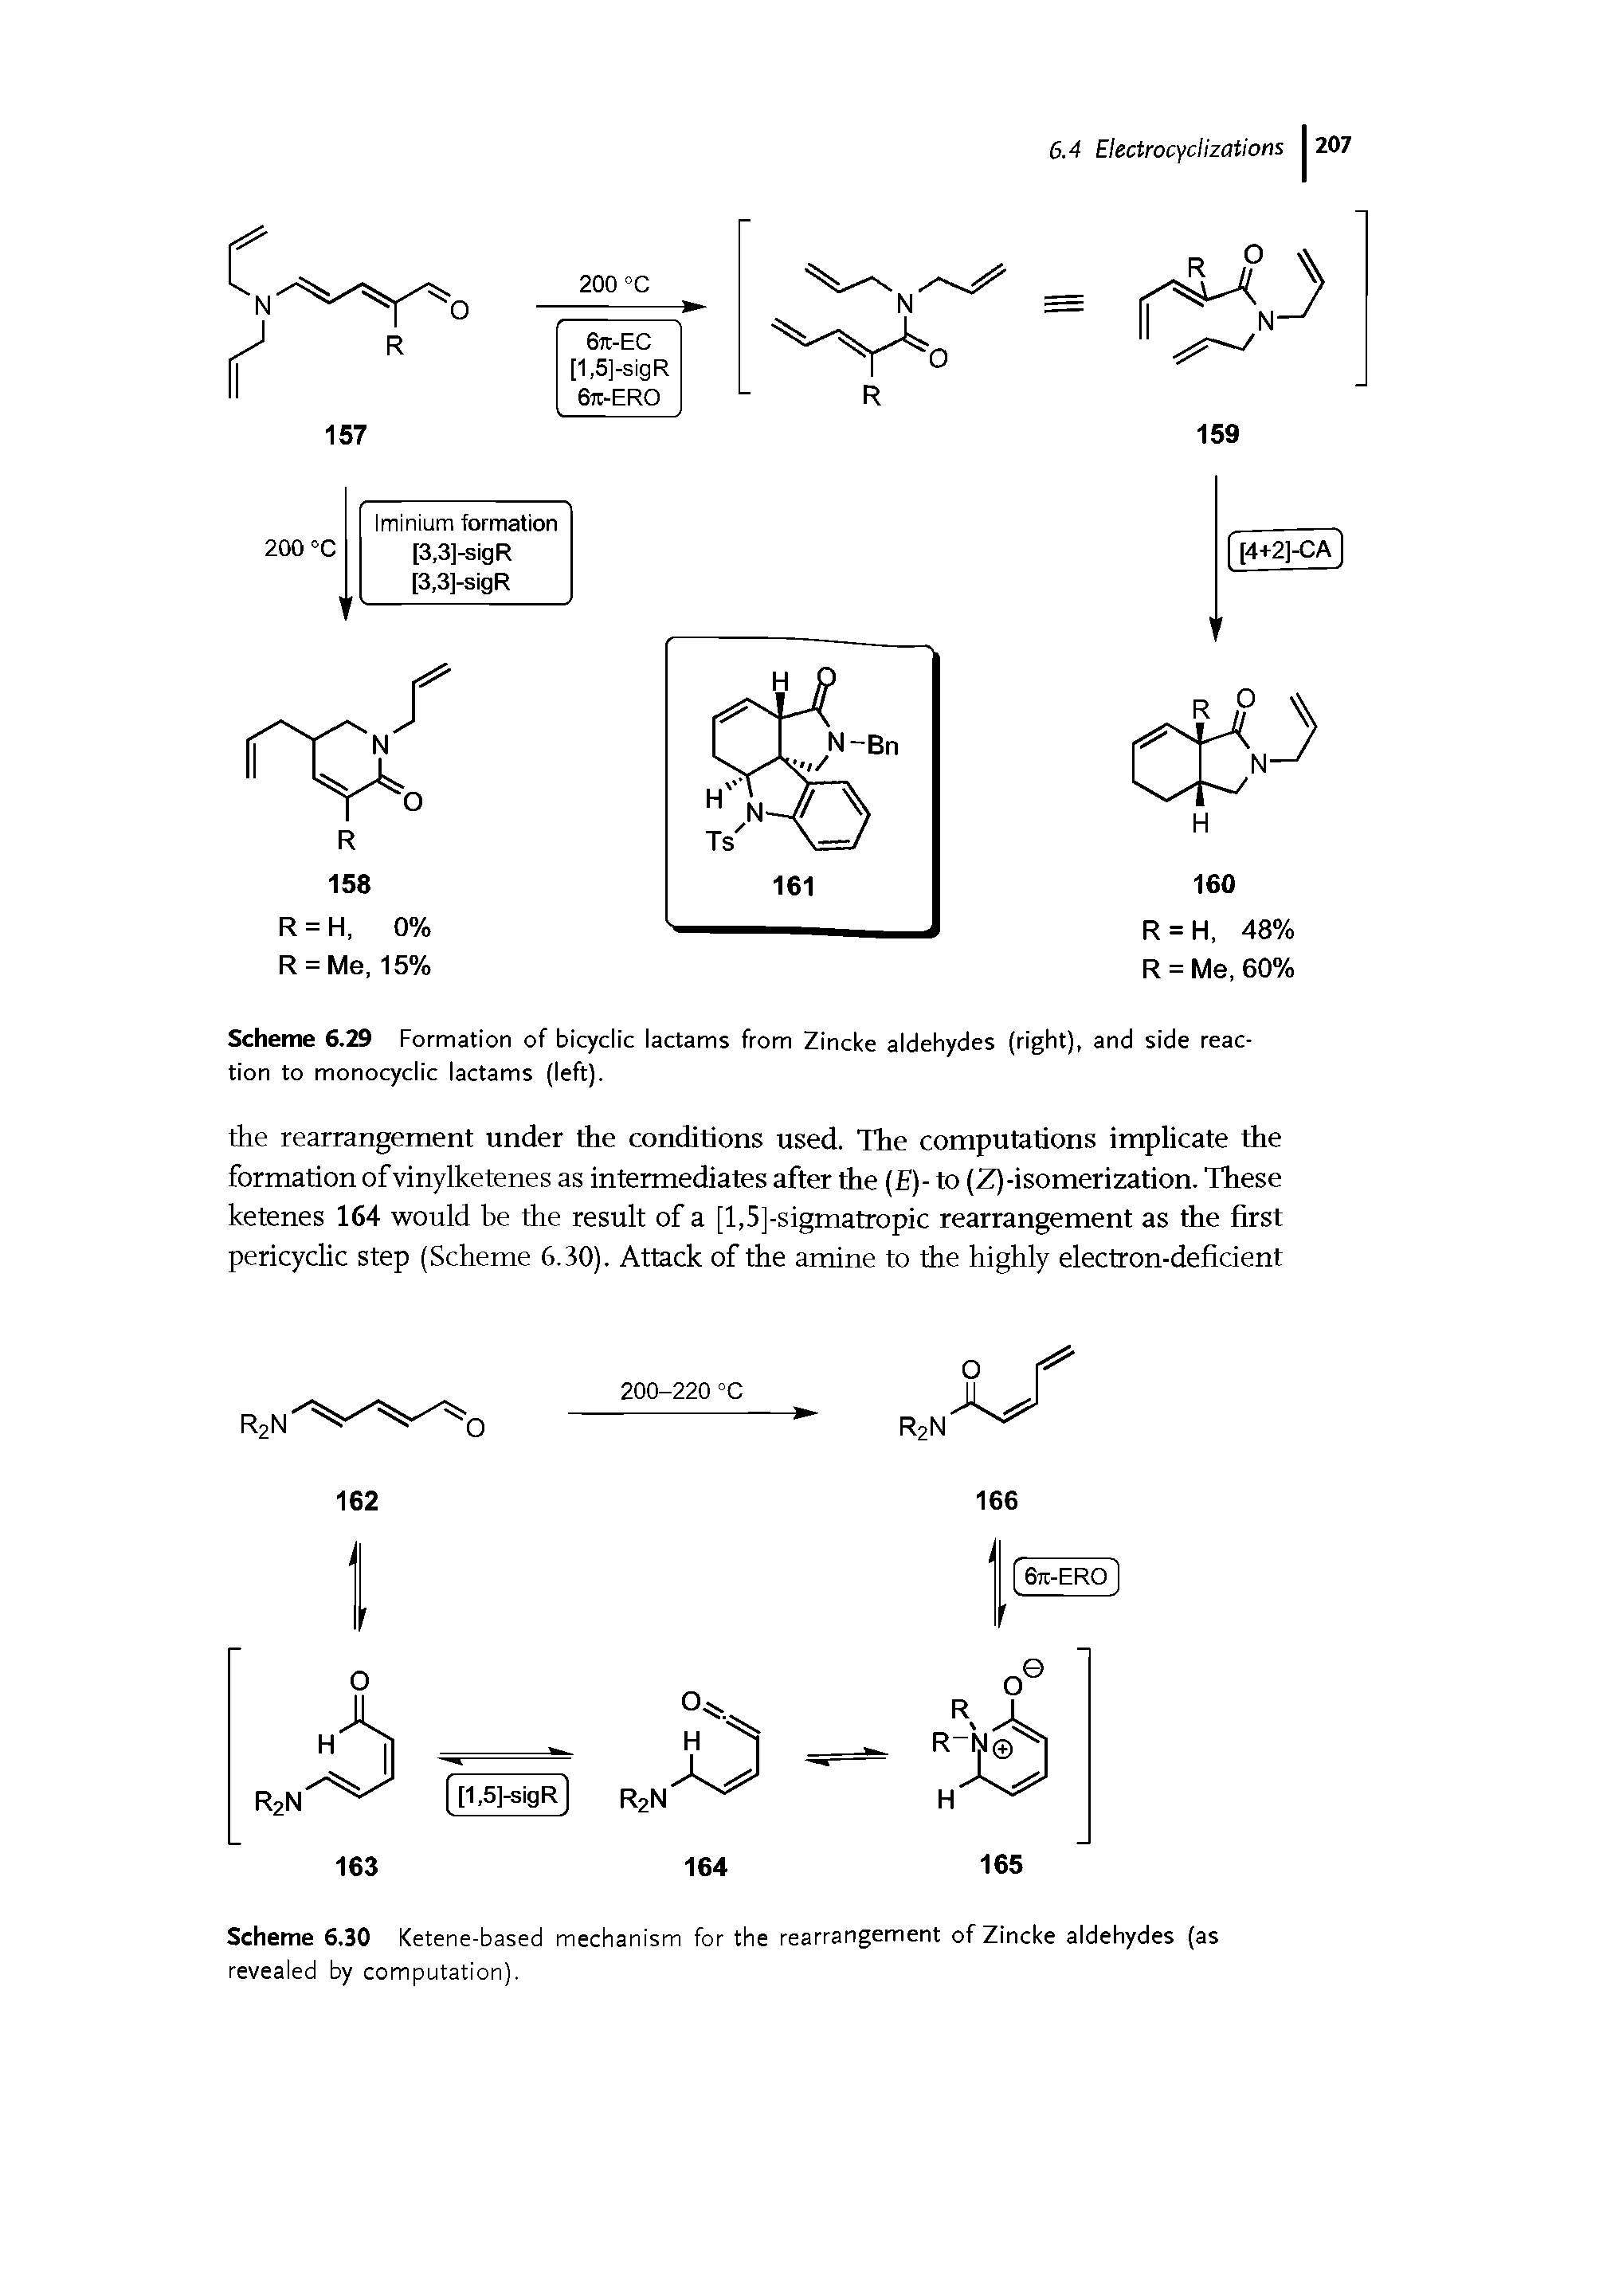 Scheme 6.30 Ketene-based mechanism for the rearrangement of Zincke aldehydes (as revealed by computation).